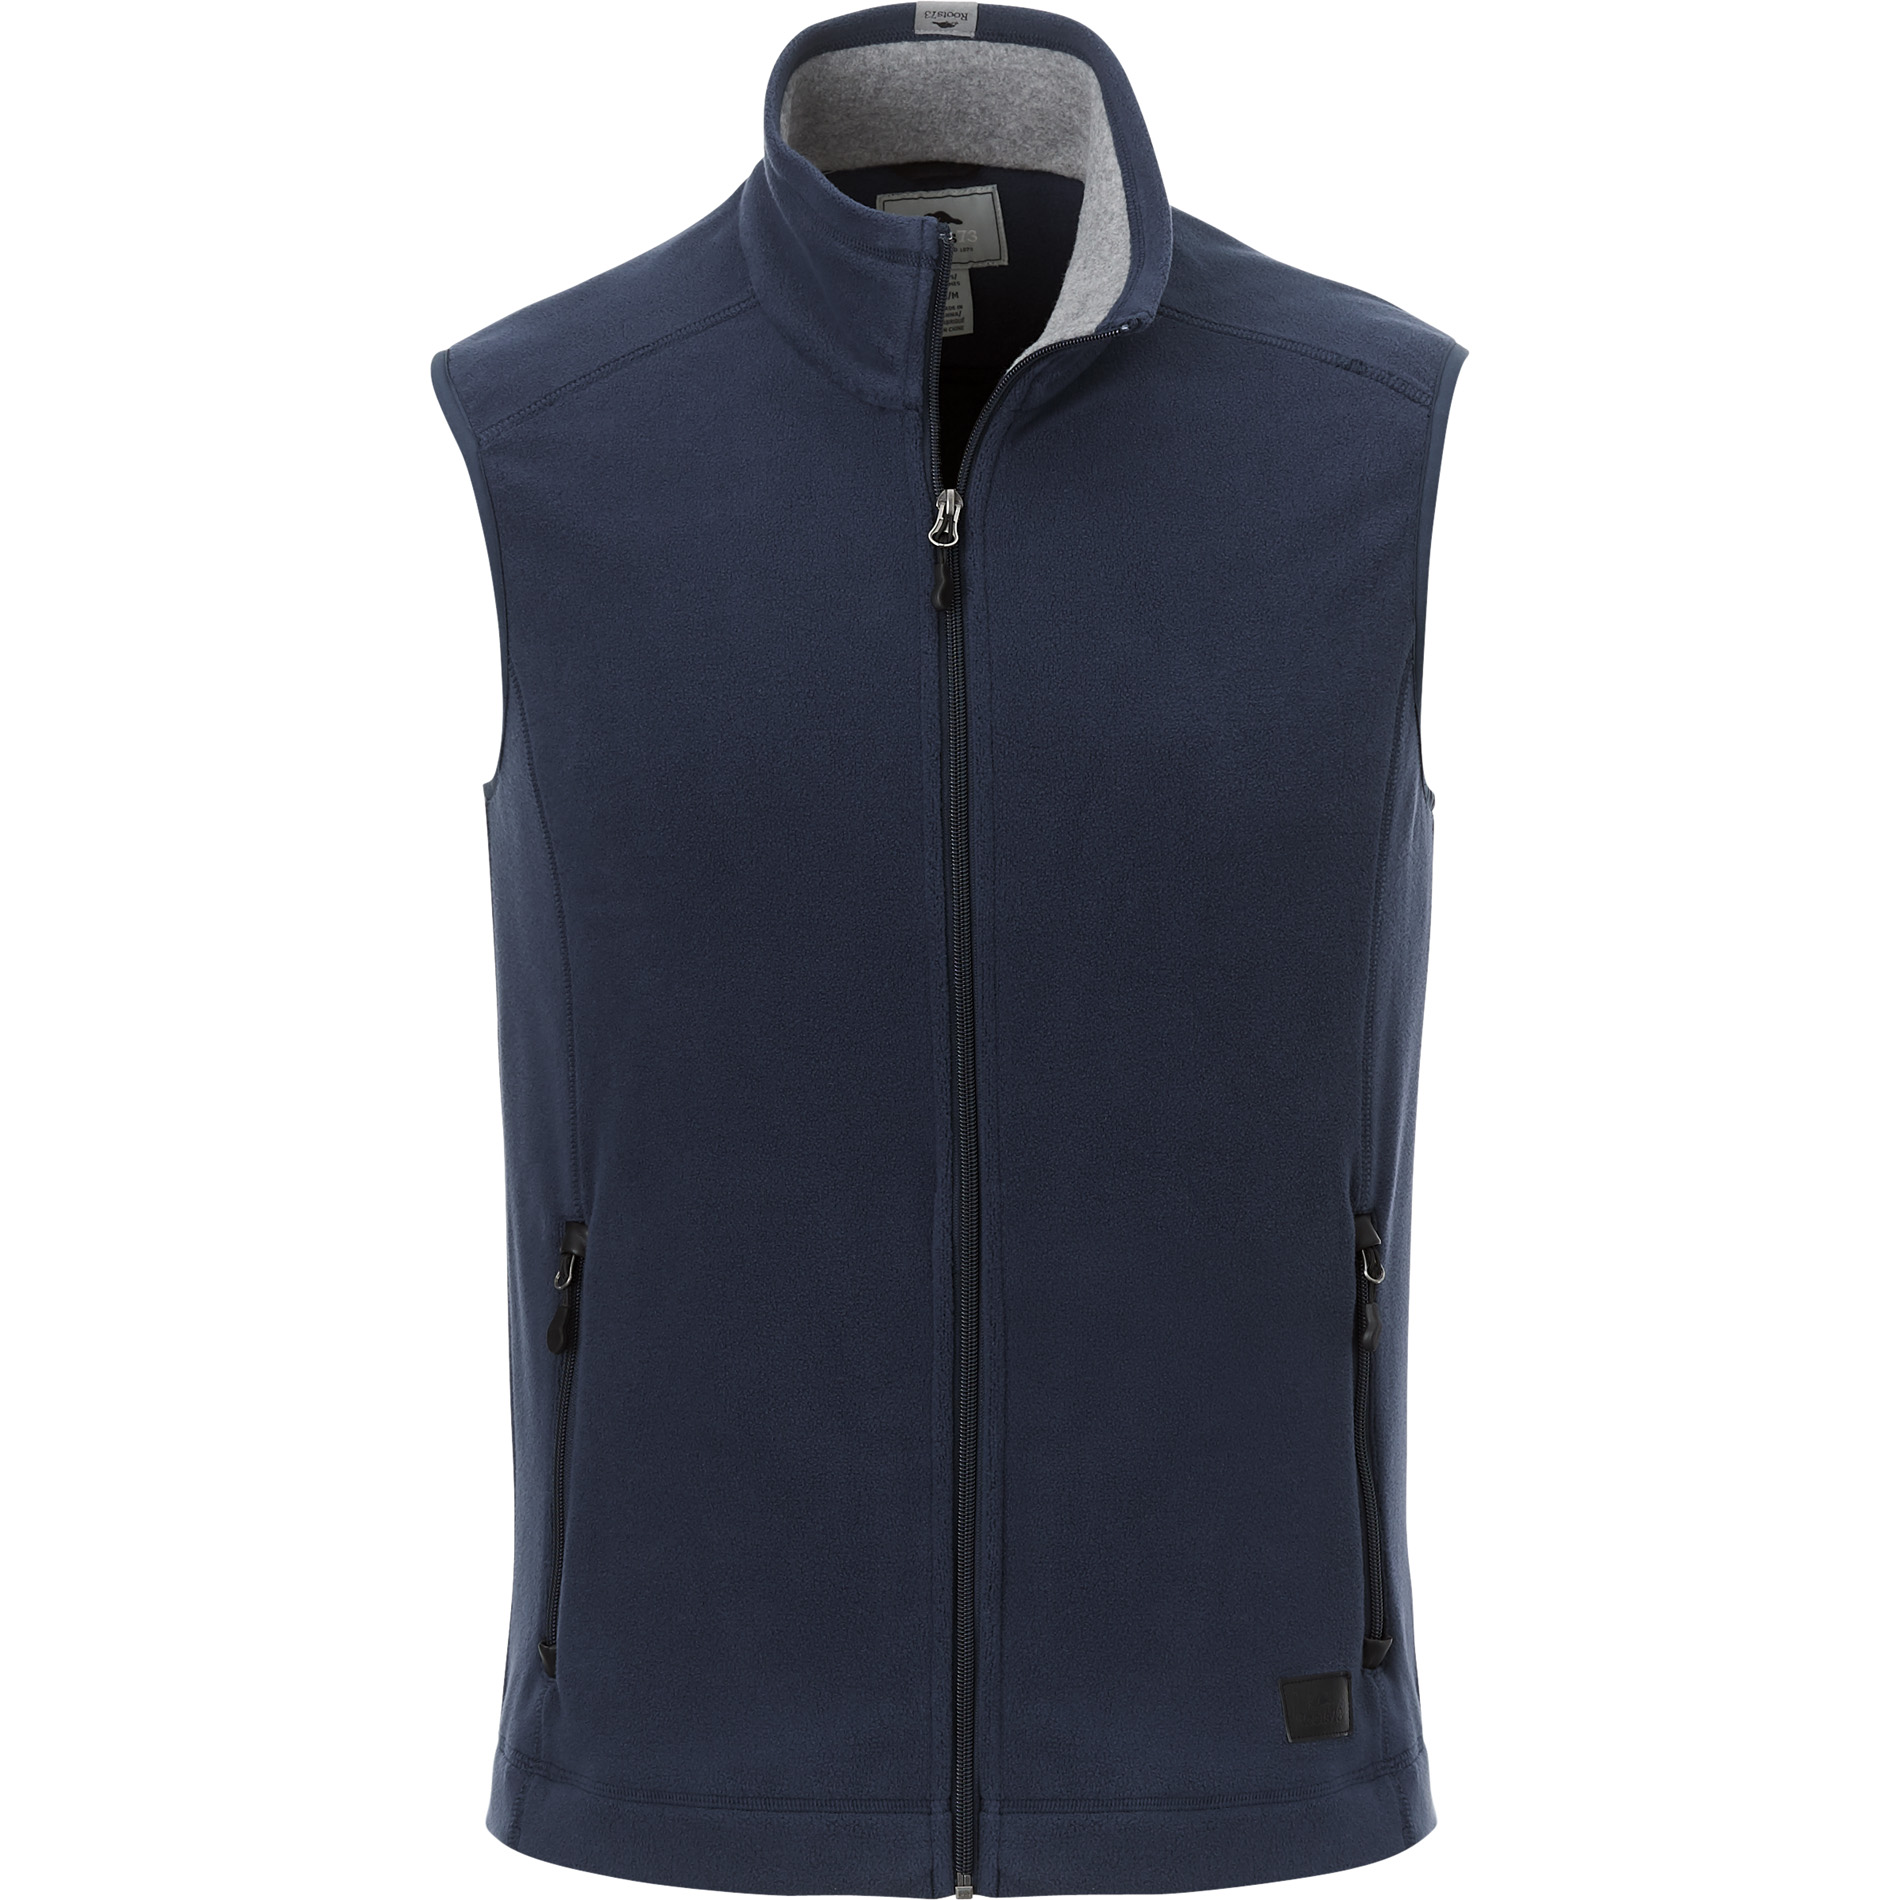 Roots73 TM18505 - Men's Willowbeach Microfleece Vest $53.31 - Outerwear